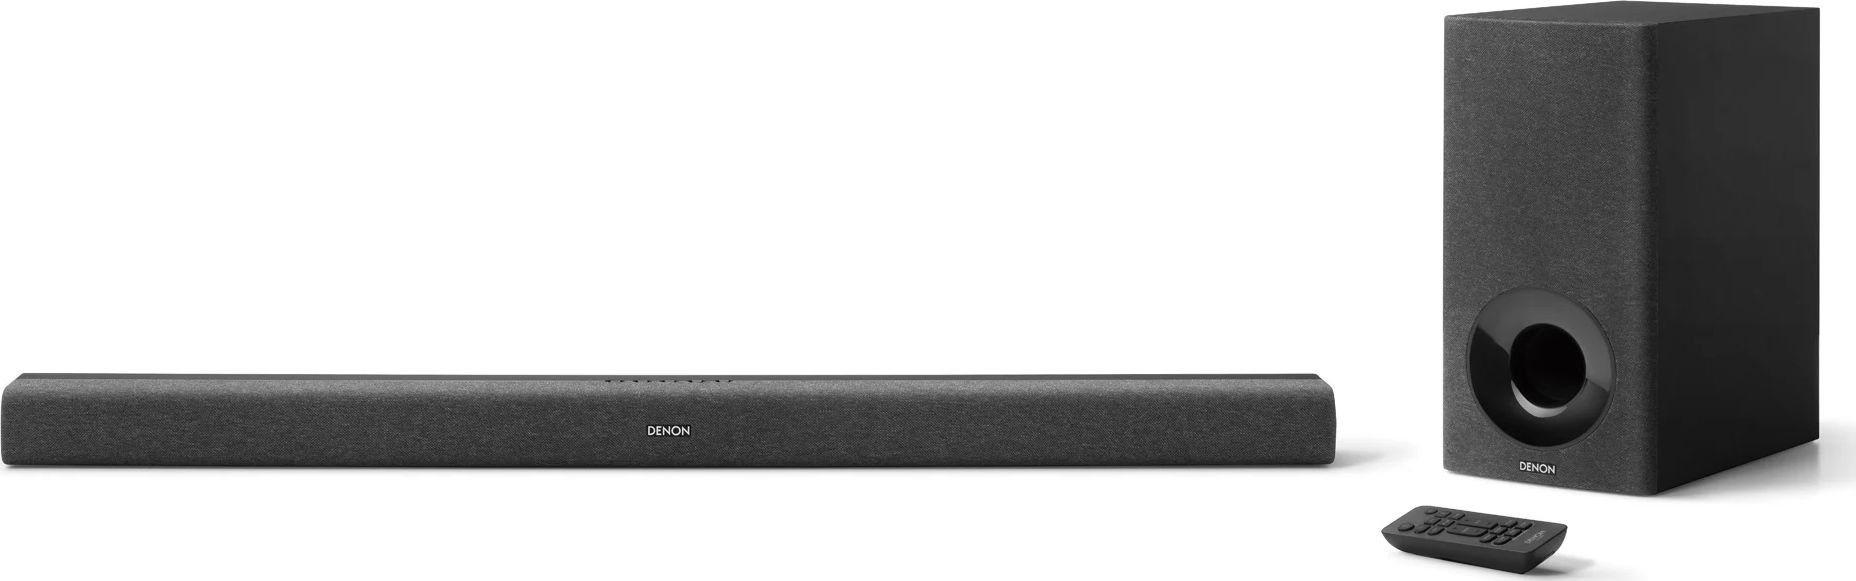 Soundbar - Soundbar Denon DHTS416,2.1, Chromecast, Bluetooth, Subwoofer wireless, HDMI ARC, 4k UHD, Dolby Audio, negru